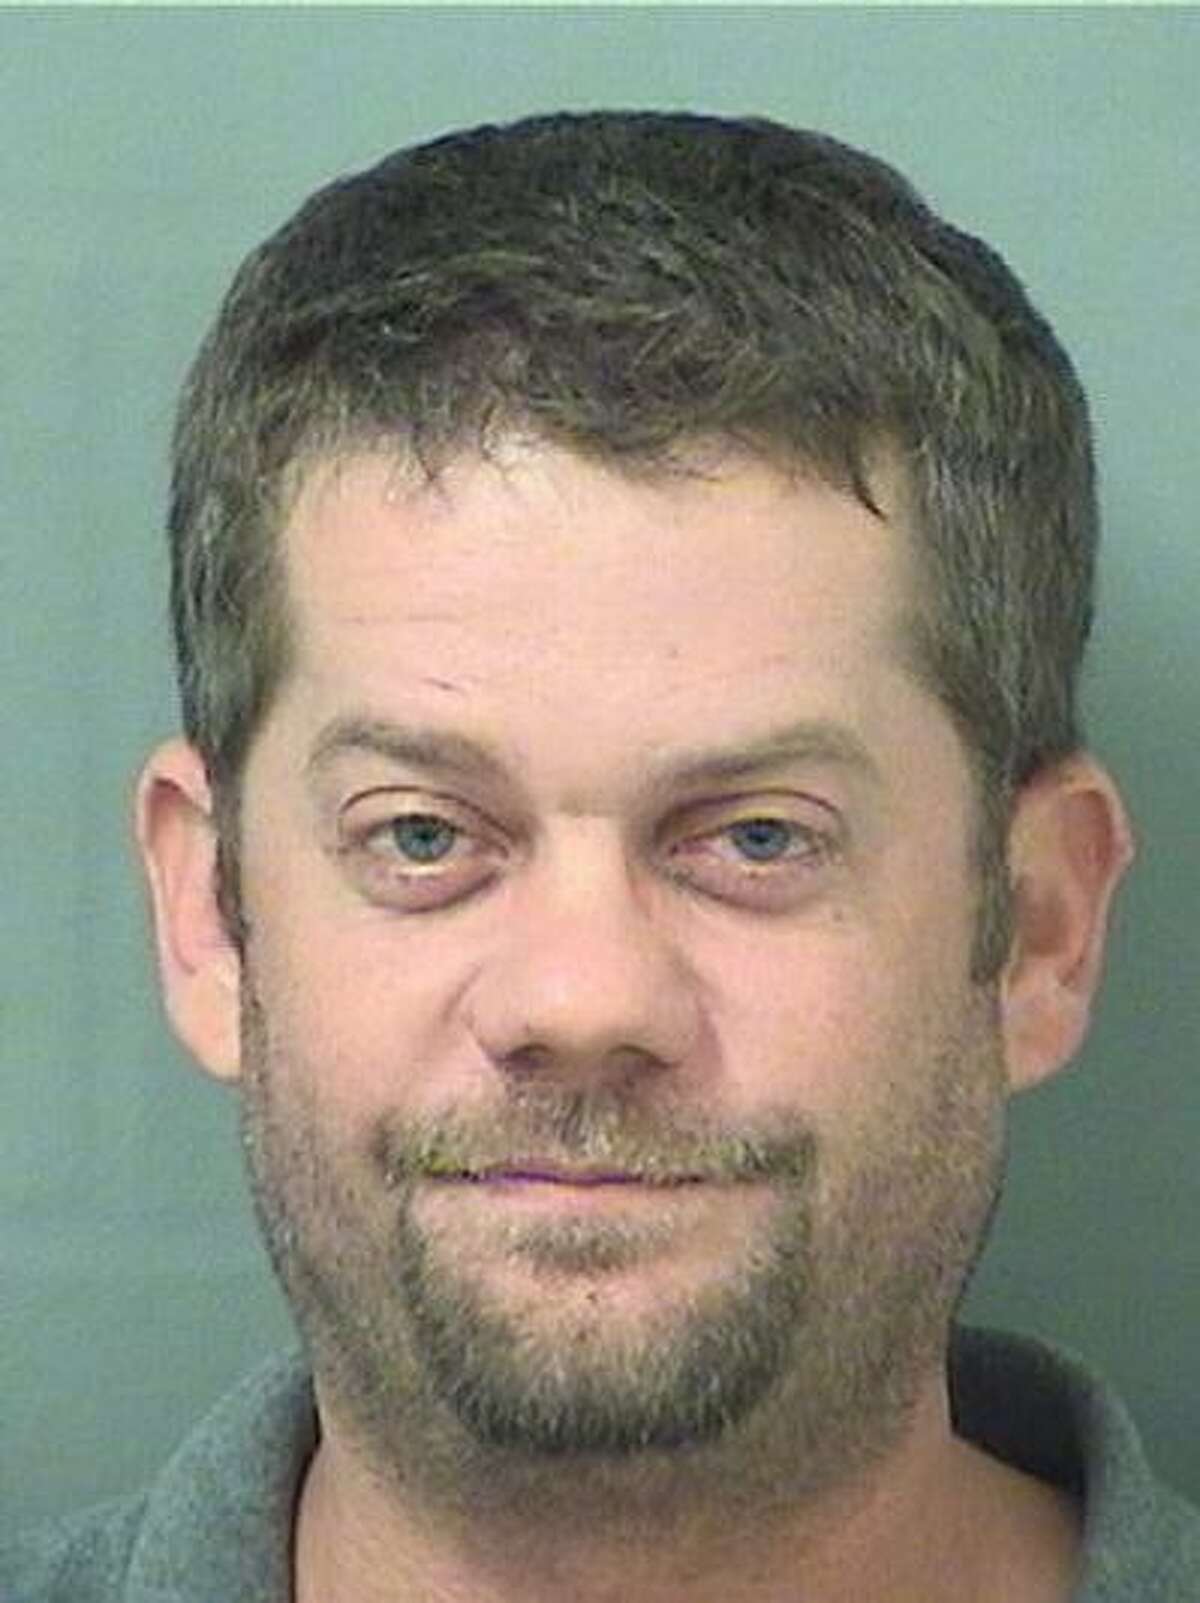 Florida man takes epic mugshot after driving naked near 